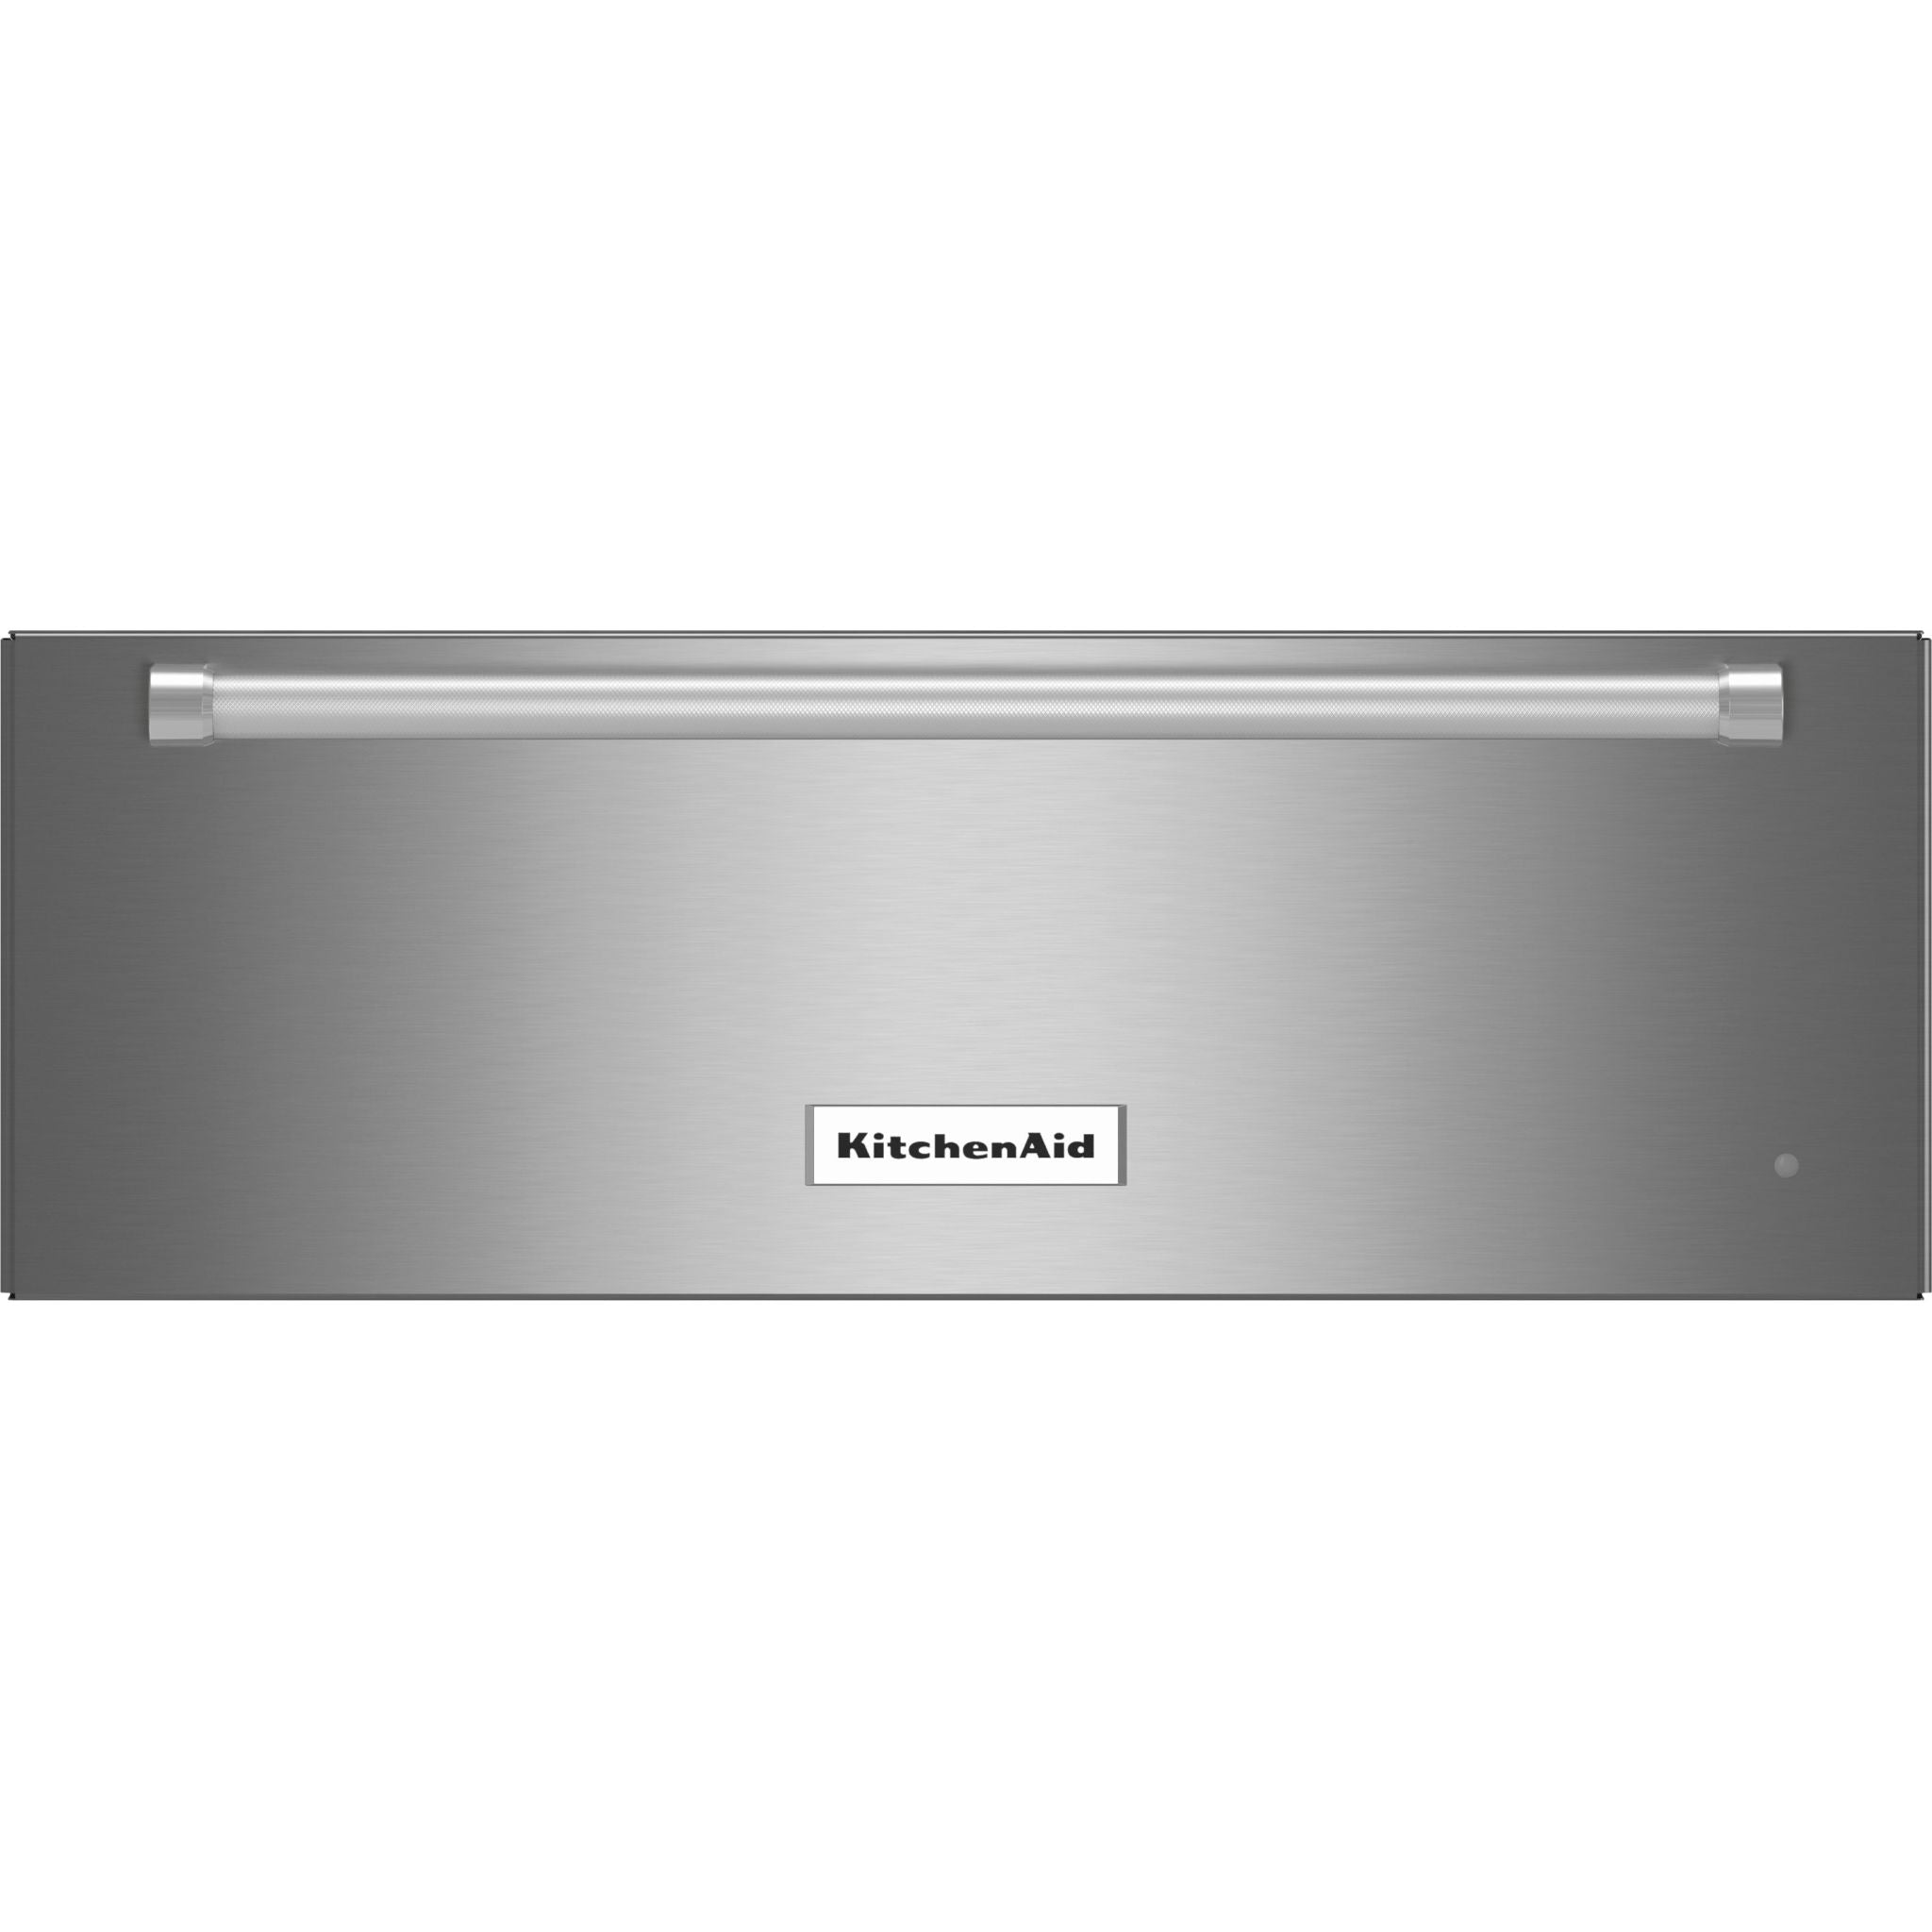 KitchenAid, KitchenAid 27" Warming Drawer (KOWT107ESS) - Stainless Steel